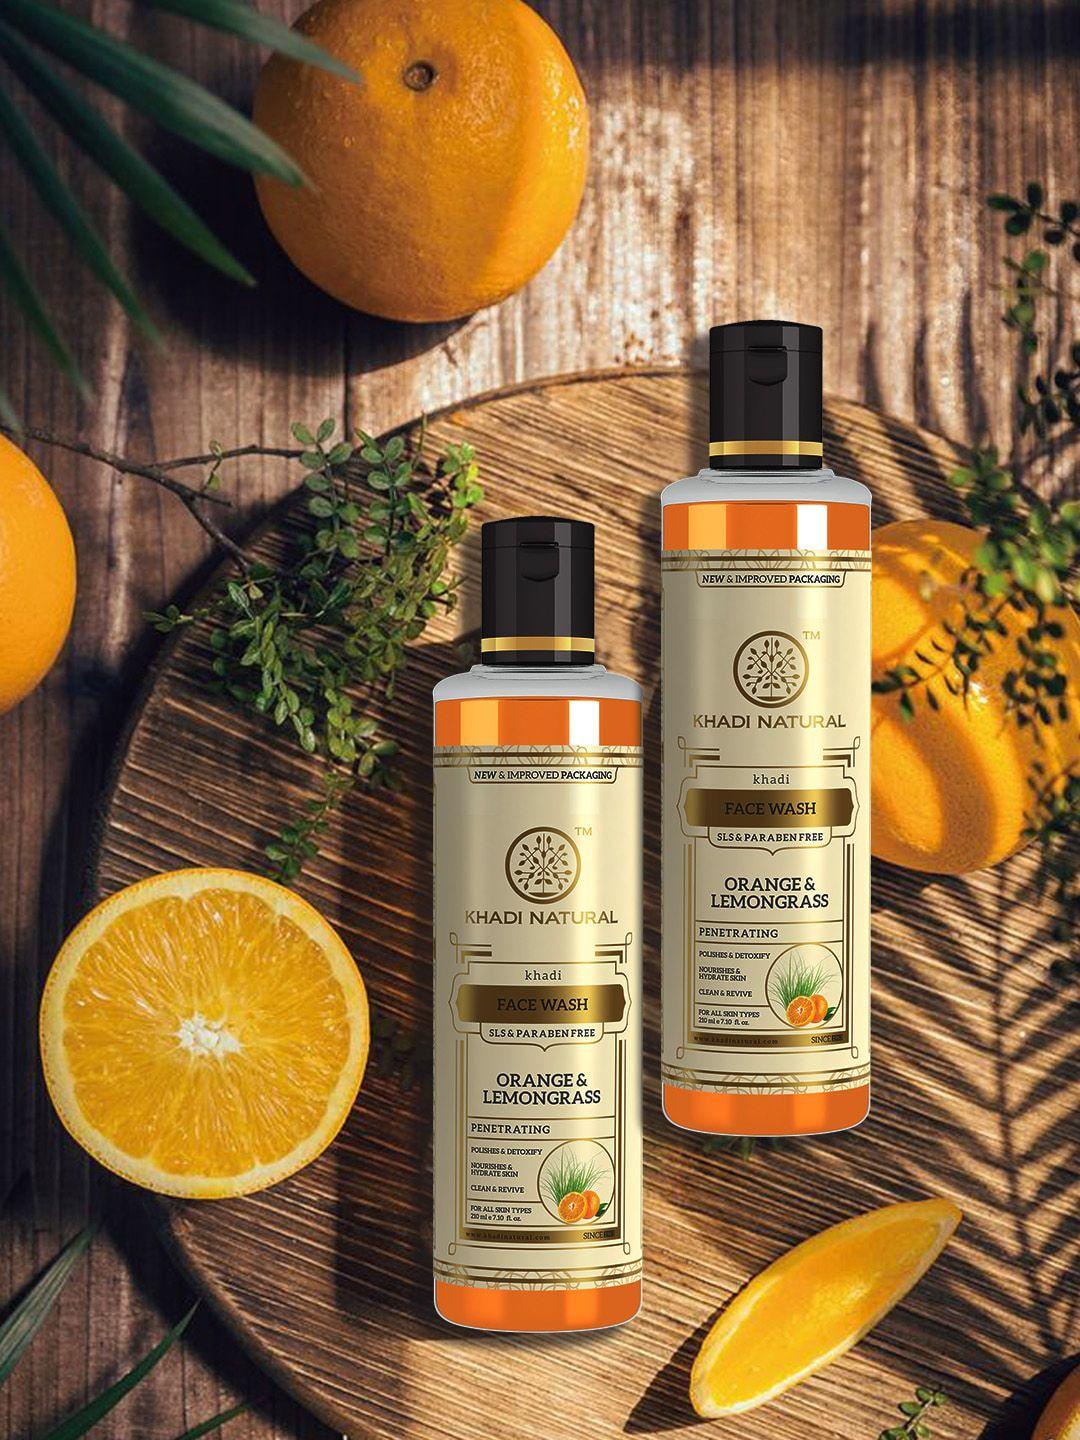 khadi natural set of 2 orange & lemongrass penetrating face wash - 210 ml each